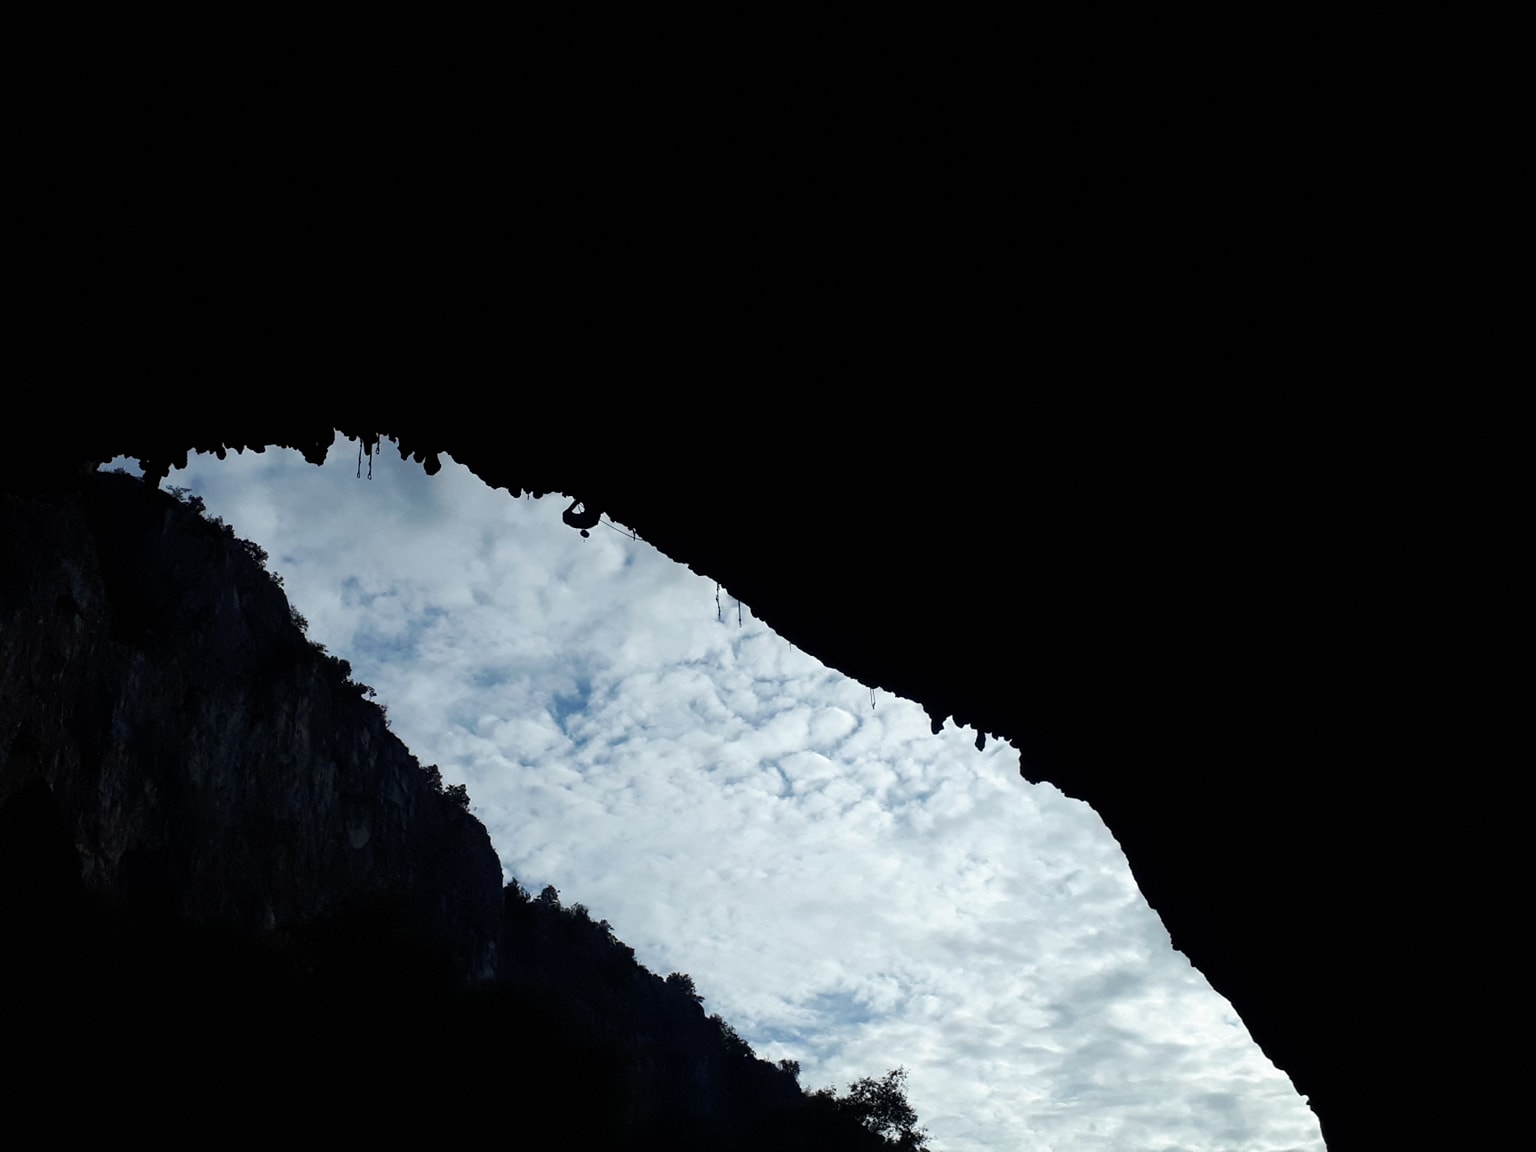 Matteo Menardi in Waterwall (9a) in Osp cave